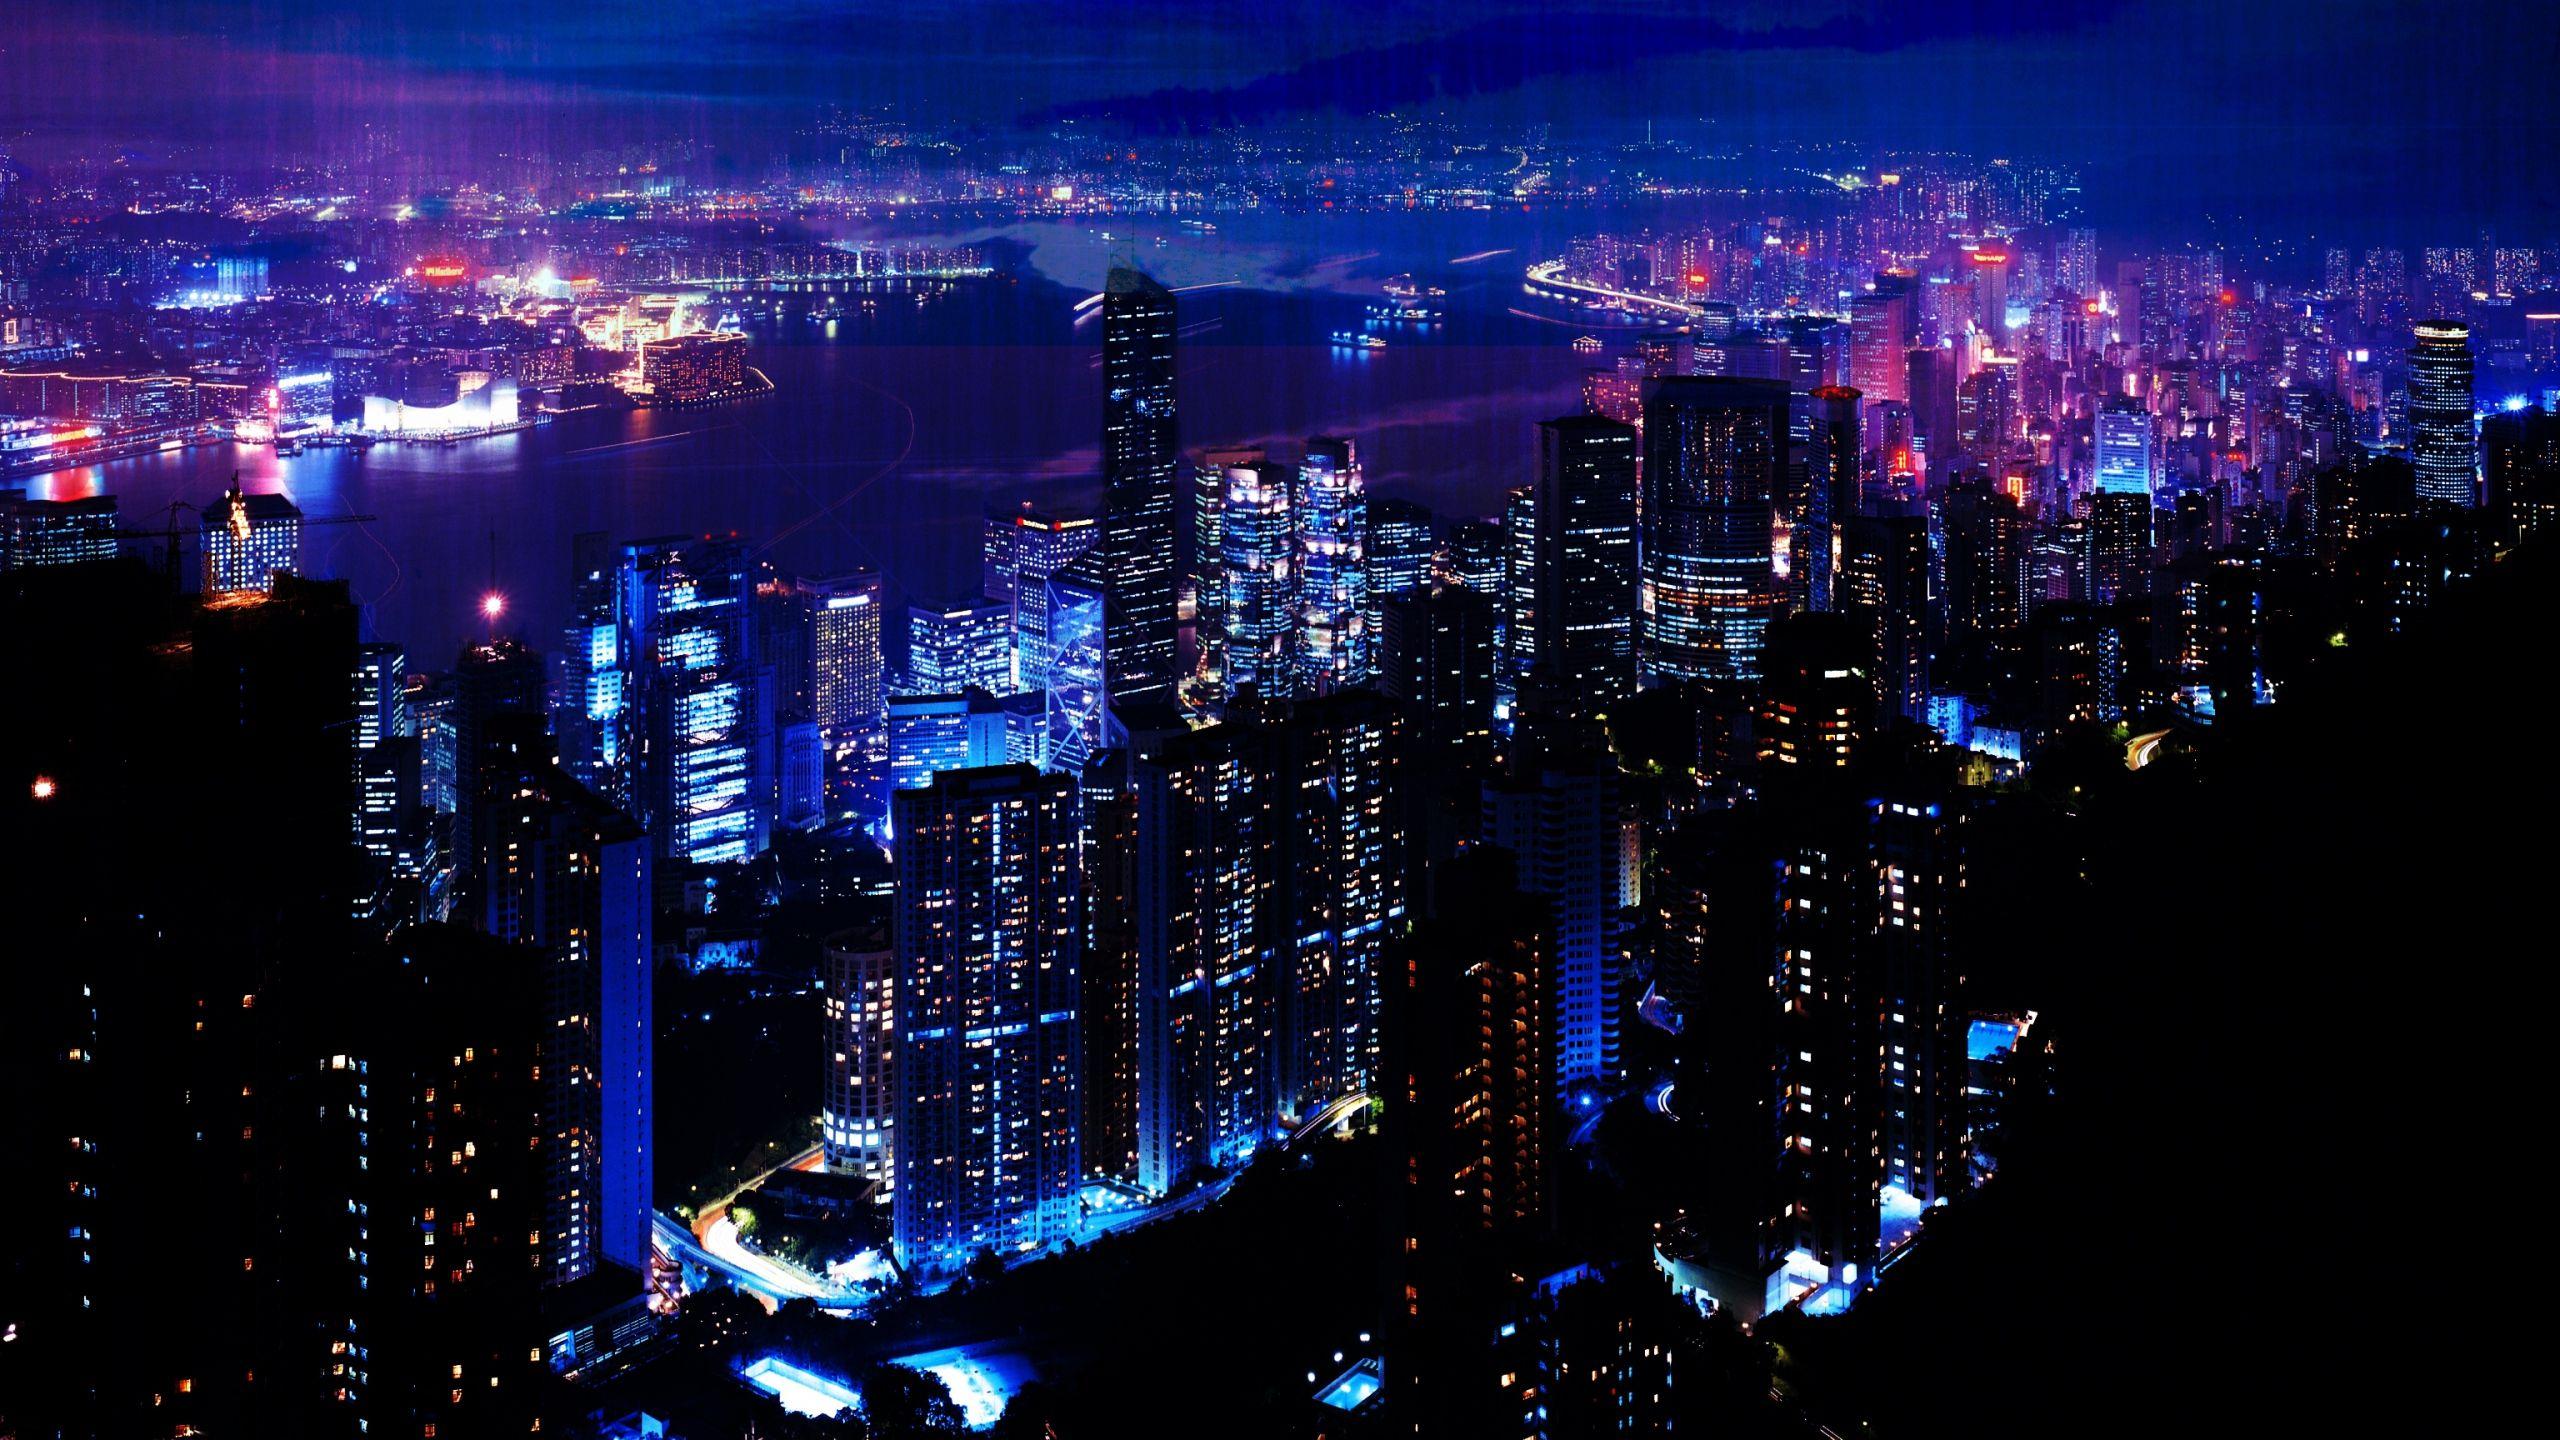 Night City Wallpaper High Quality. City wallpaper, City lights wallpaper, Aesthetic desktop wallpaper